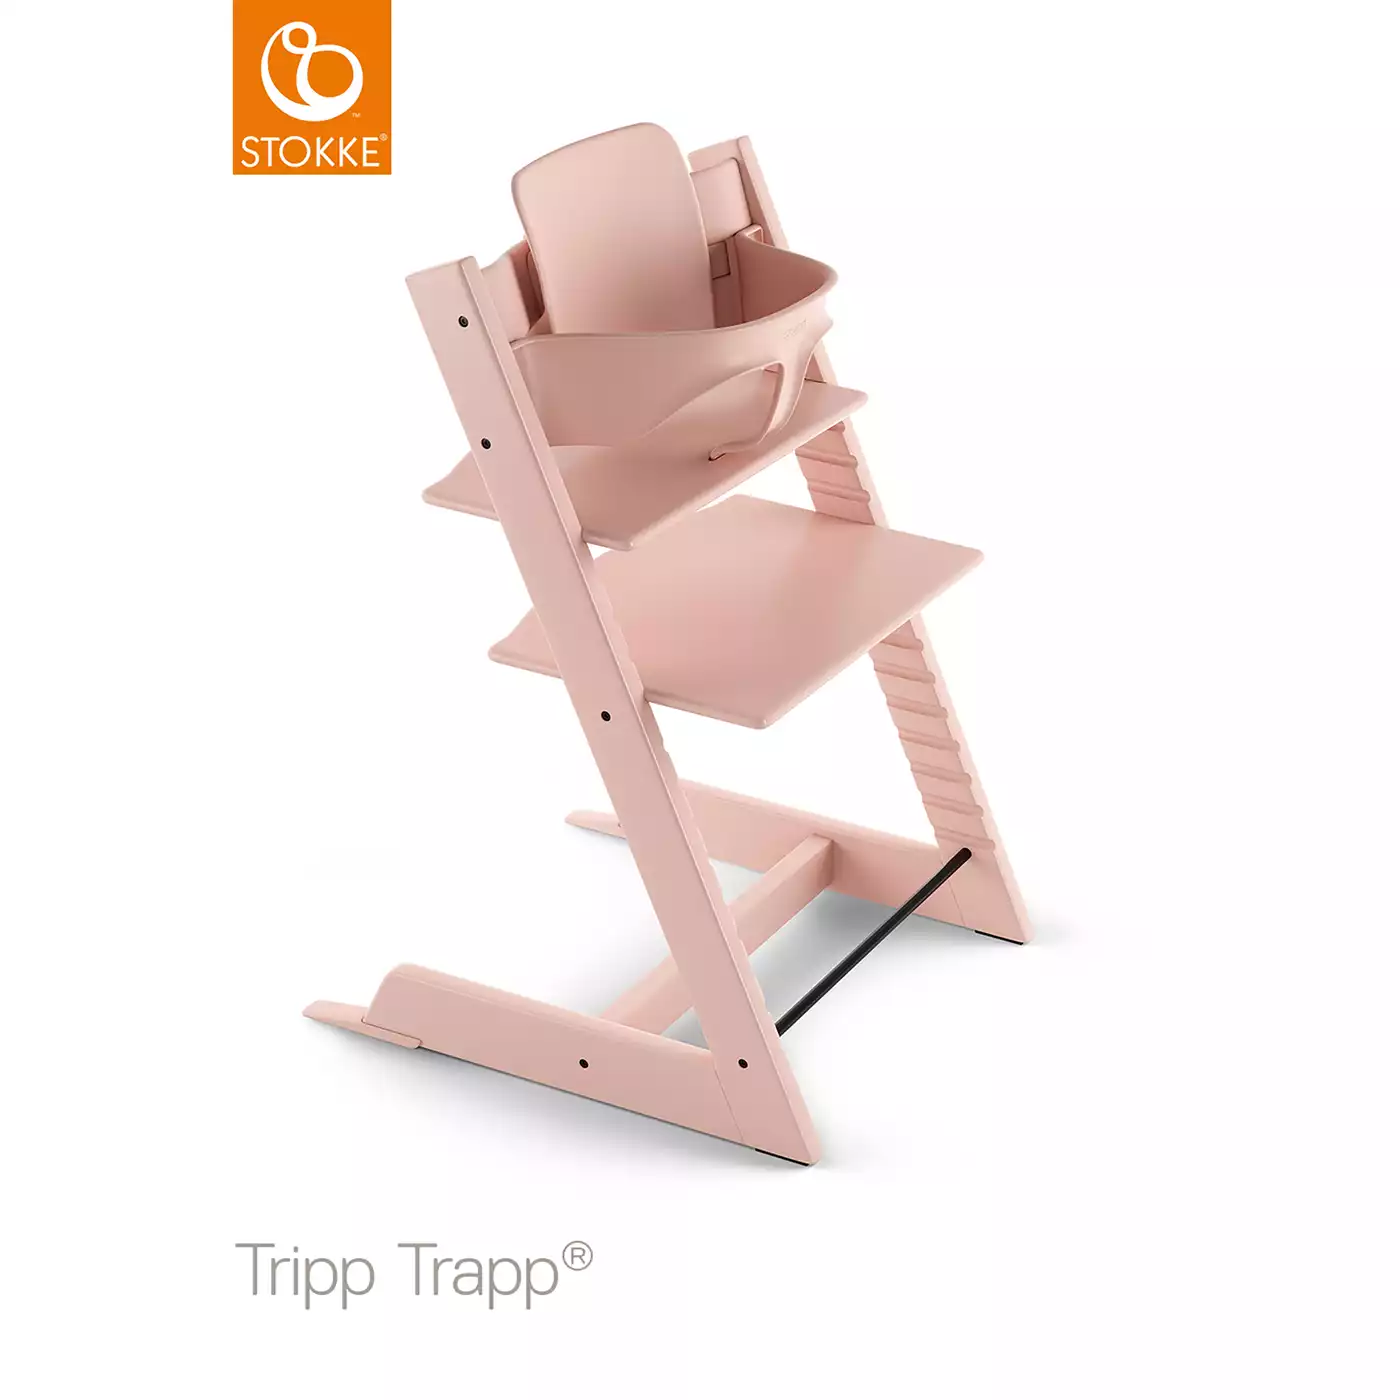 Tripp Trapp® Baby Set serene pink STOKKE Pink 2000575885406 5